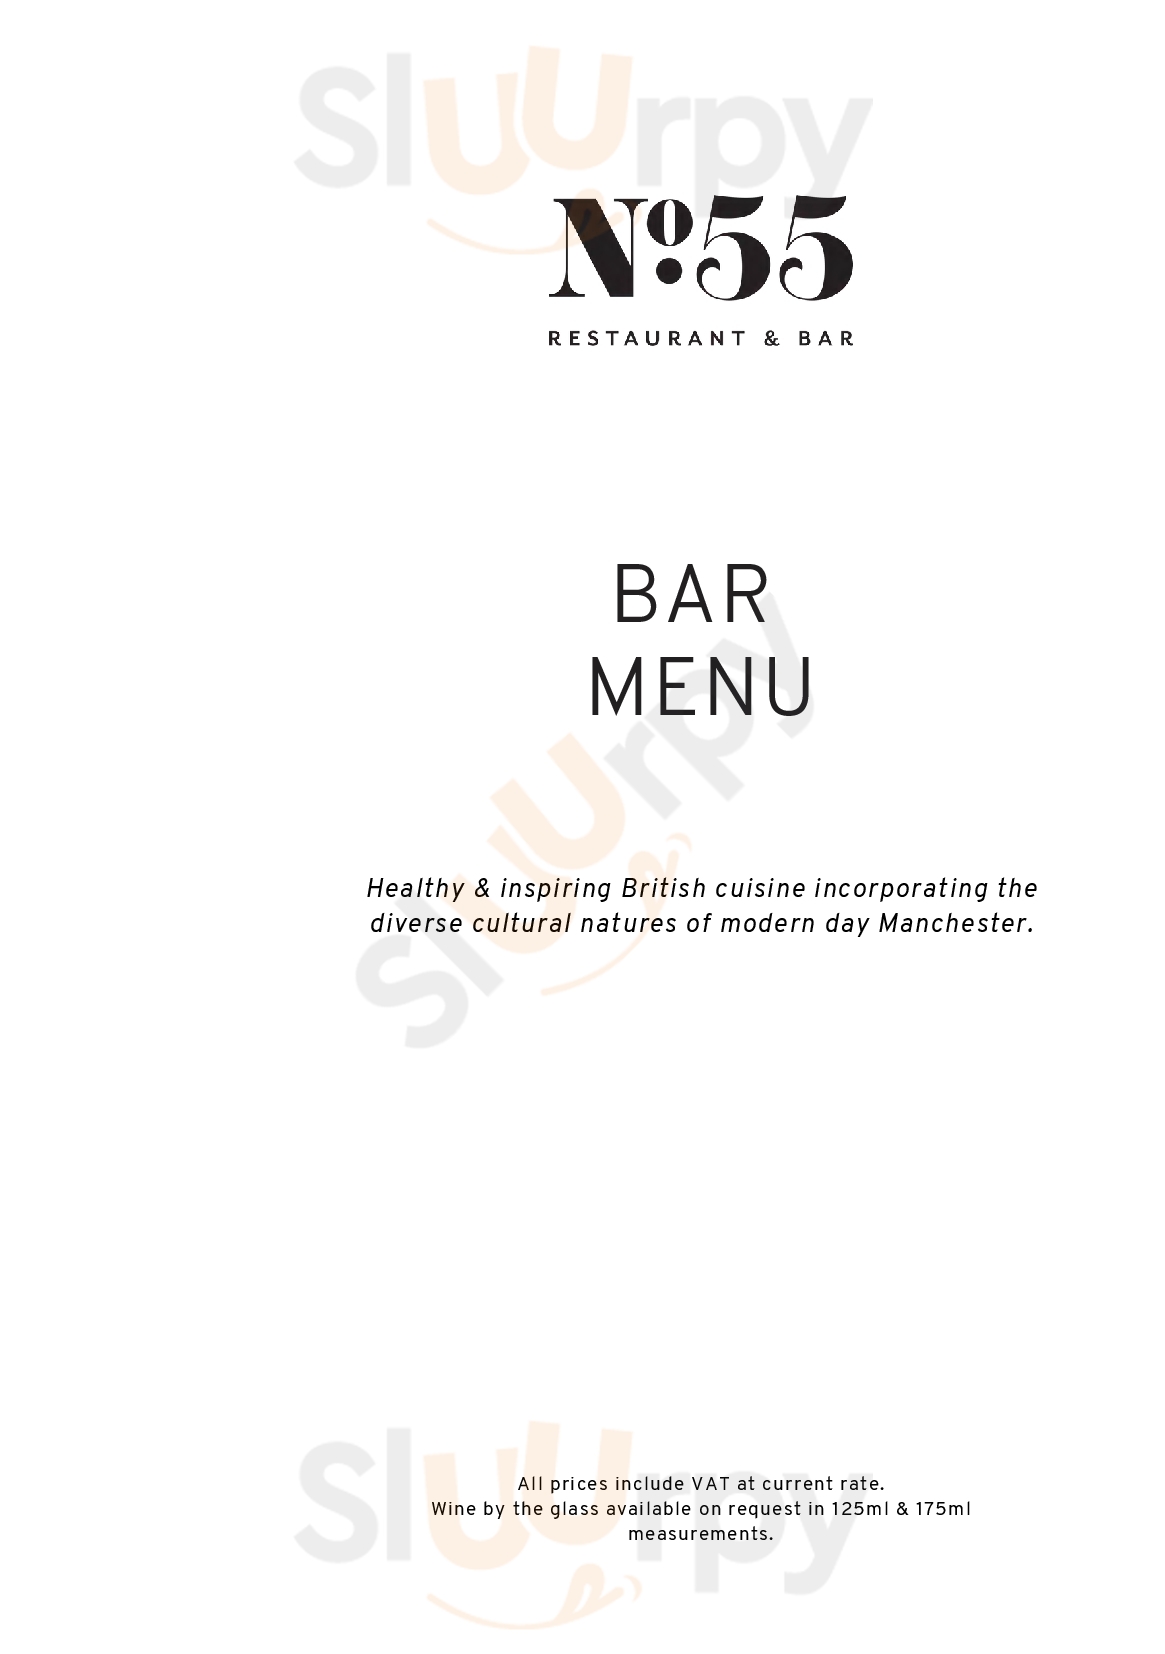 No.55 Restaurant & Bar Manchester Menu - 1